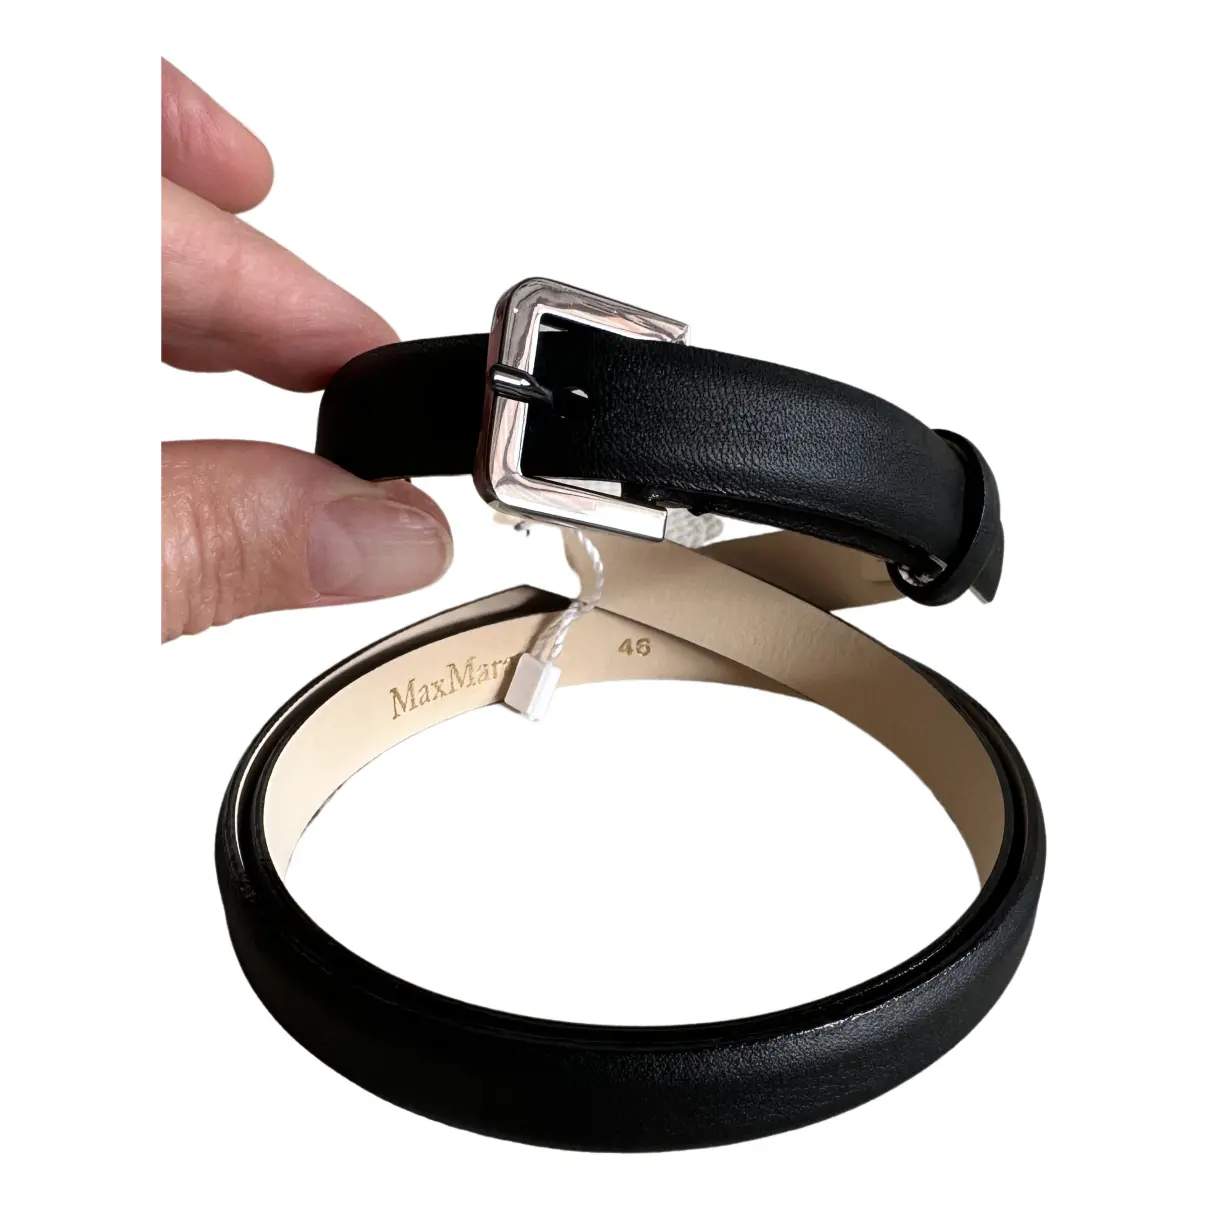 Buy Max Mara Max Mara Atelier leather belt online